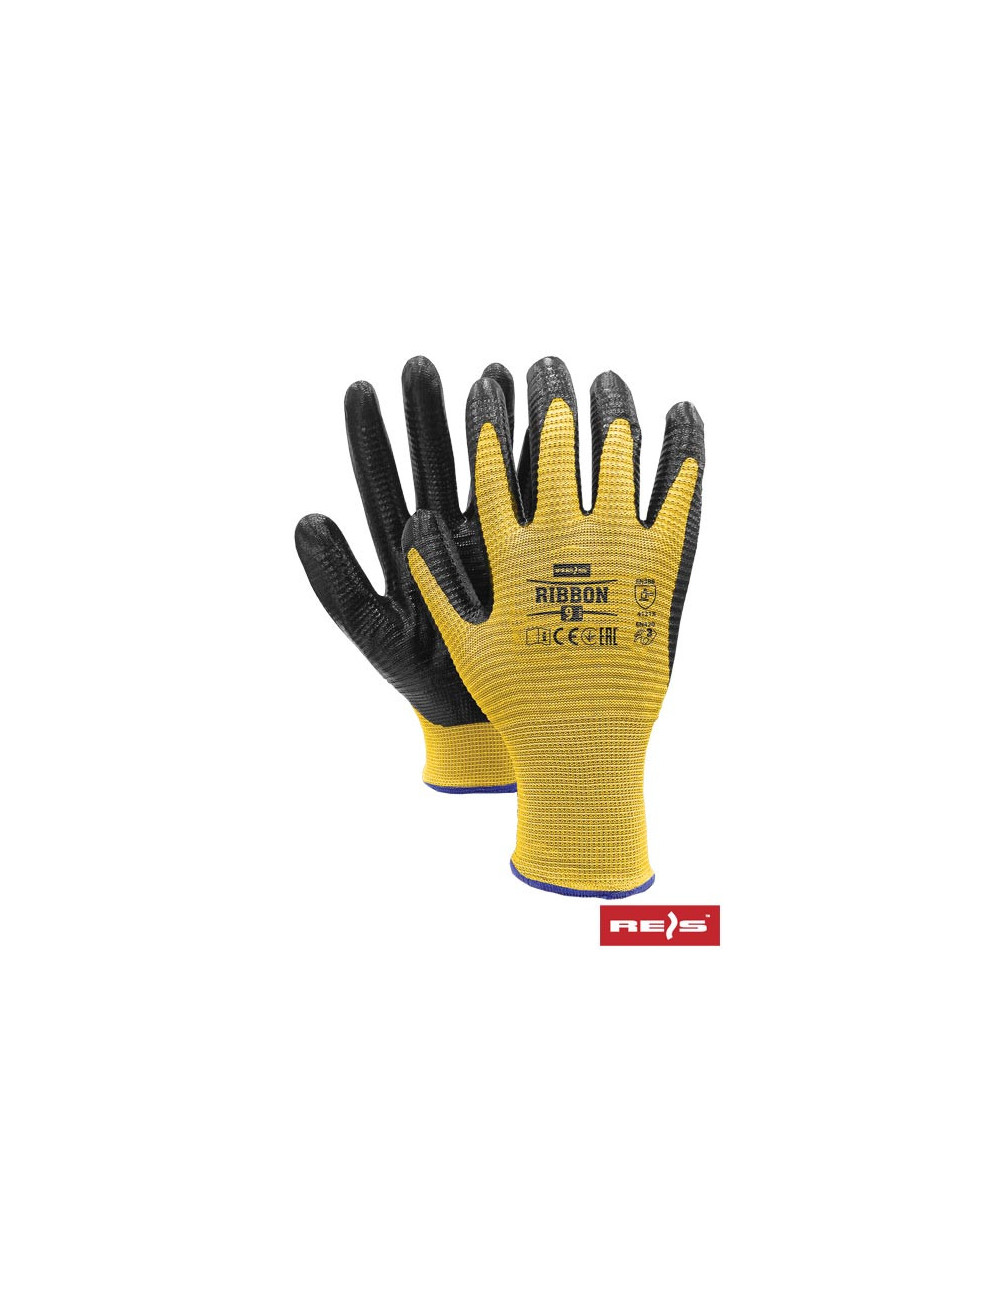 Protective gloves ribbon yb yellow-black Reis